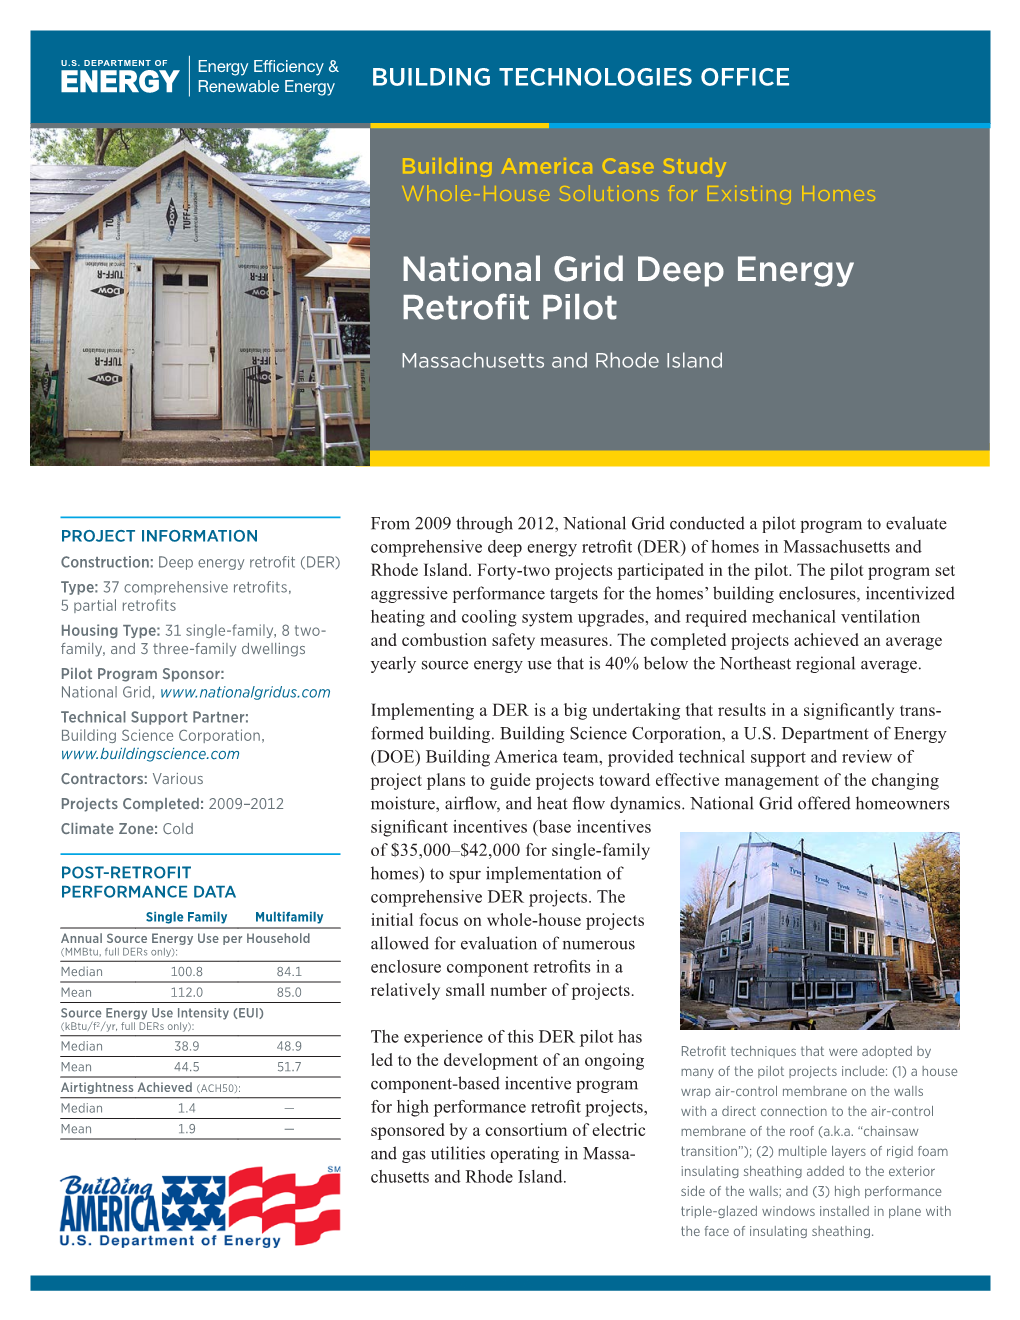 National Grid Deep Energy Retrofit Pilot